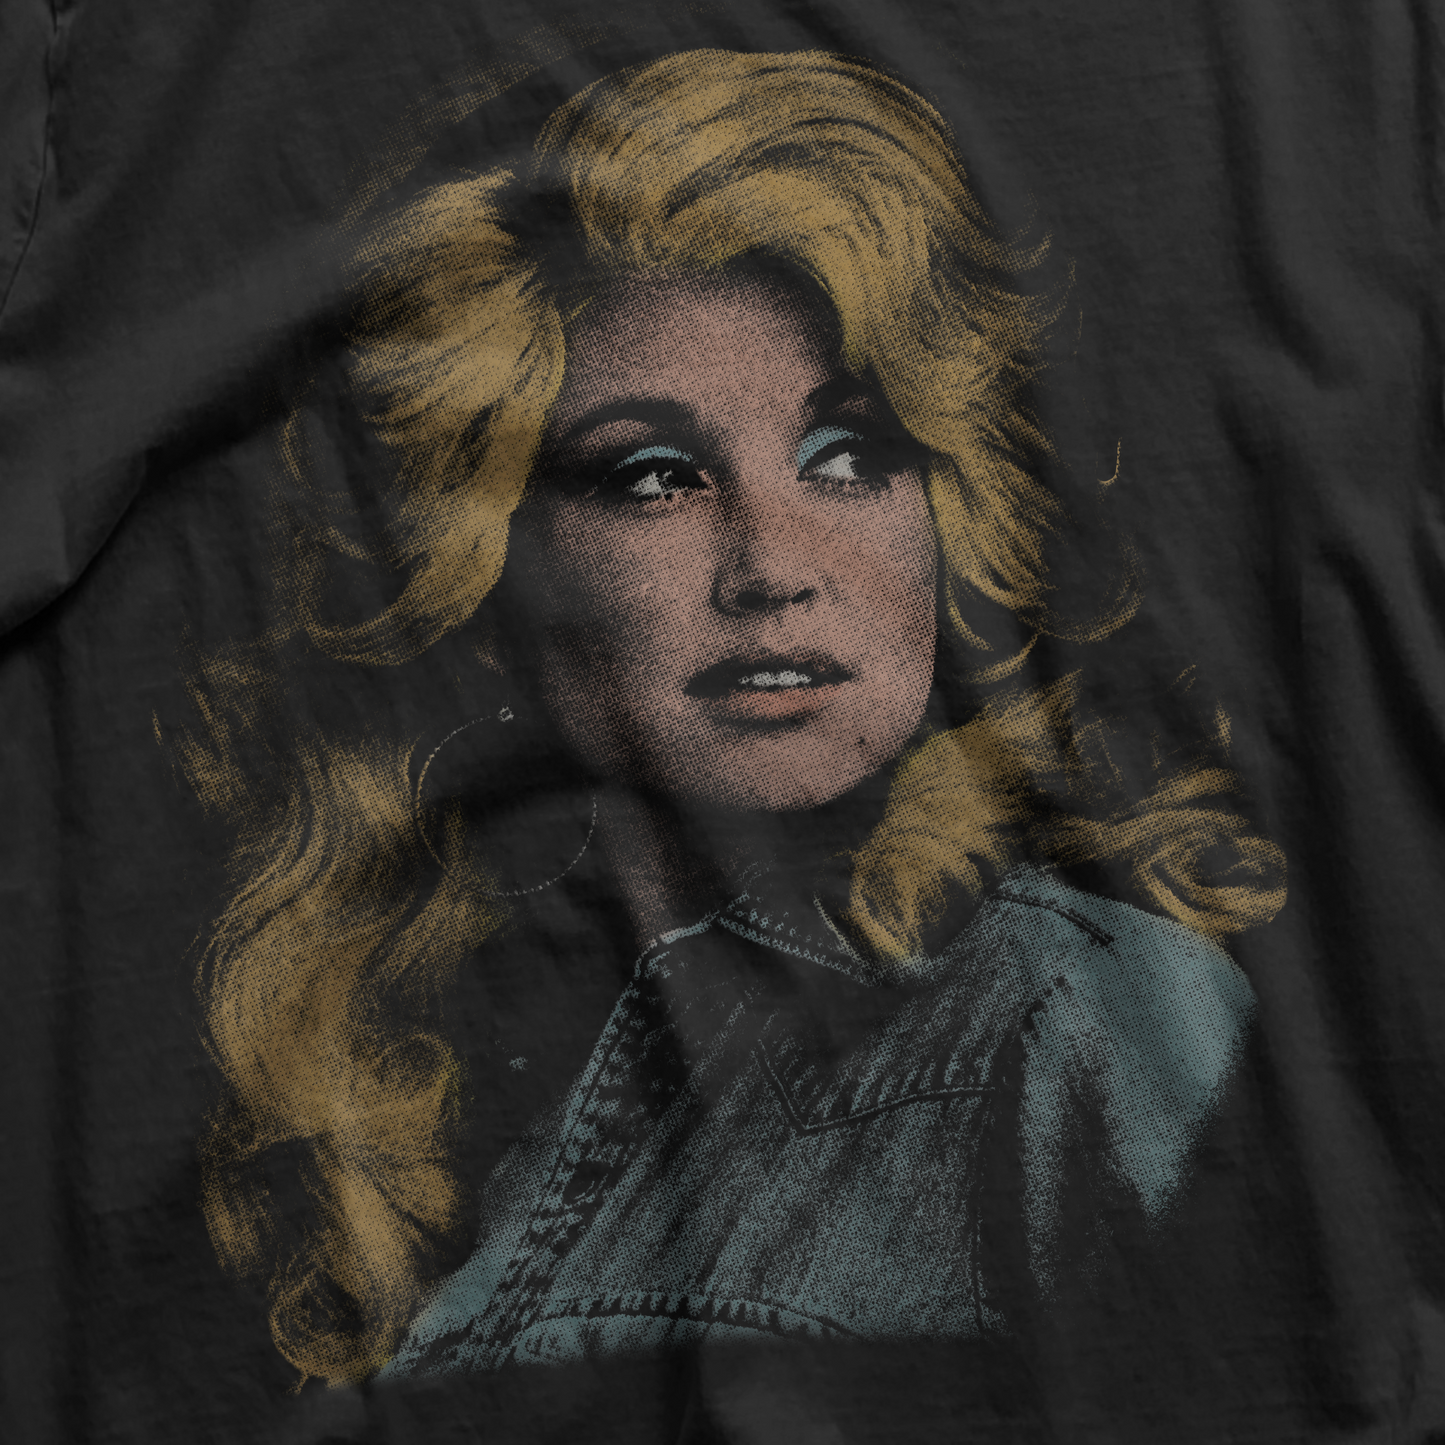 Dolly Parton - Vintage Black Shirt